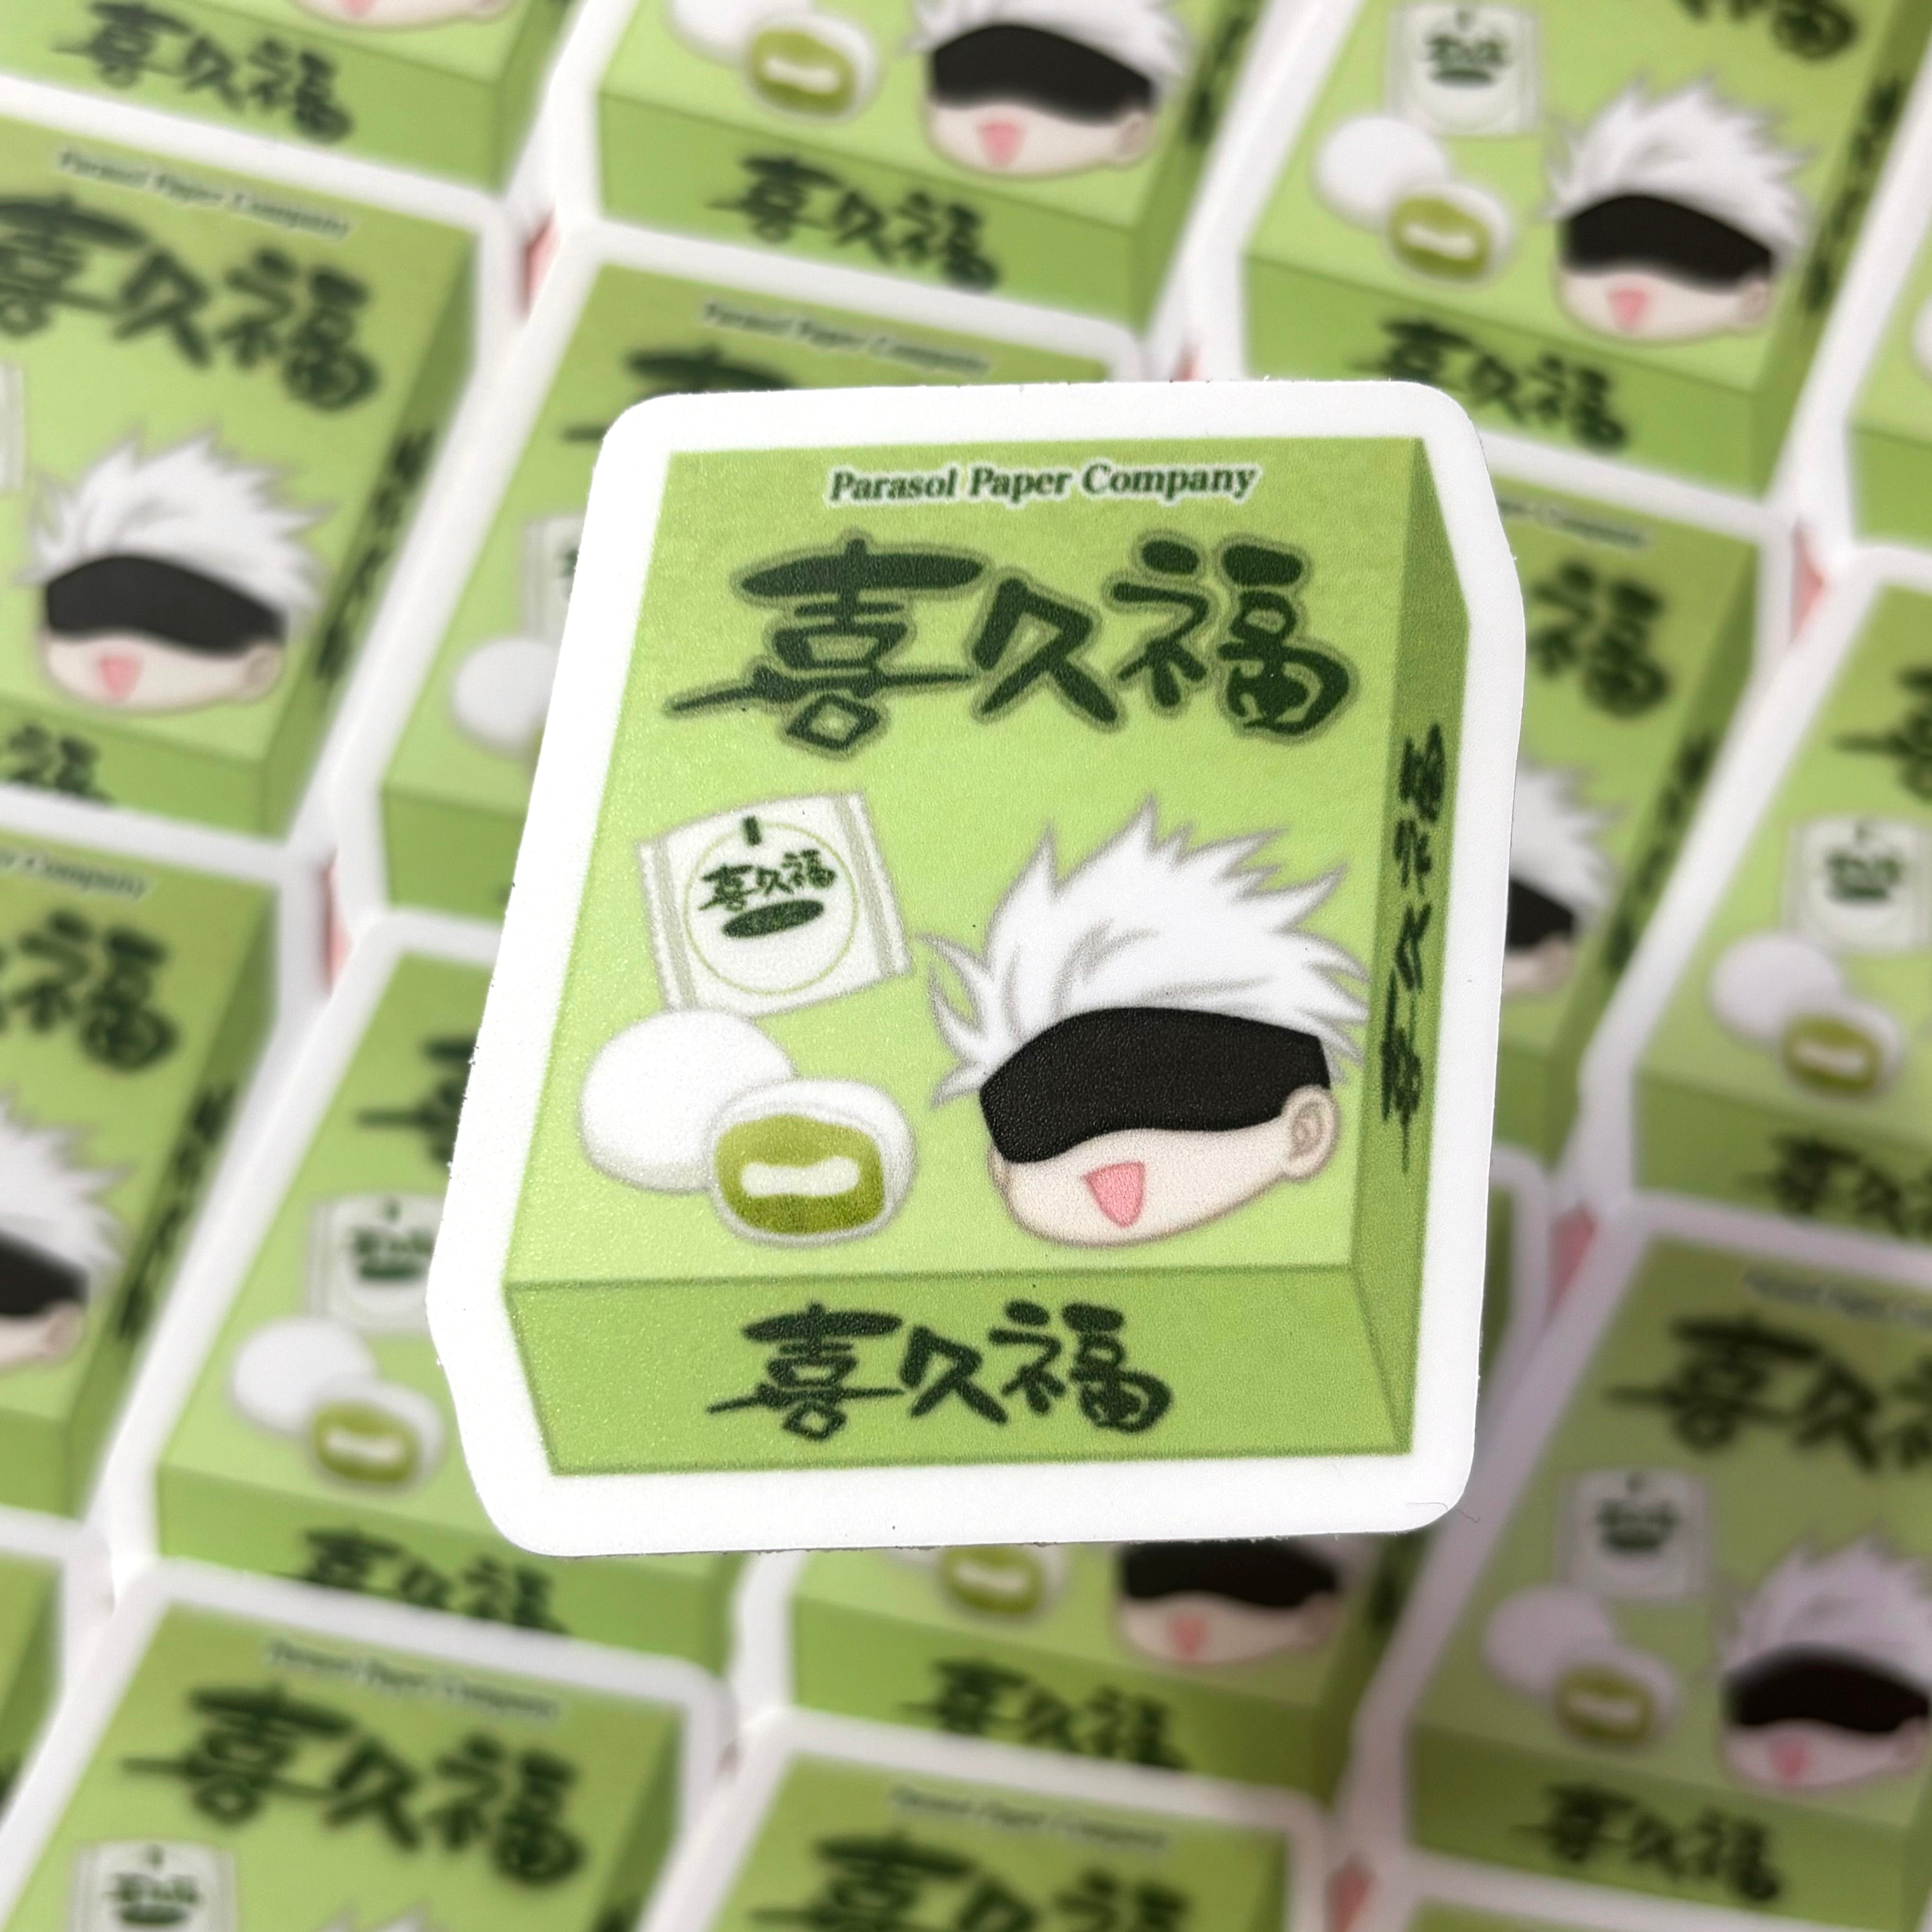 [WATERPROOF] JJK Meme Anime Vinyl Sticker Decal Pack